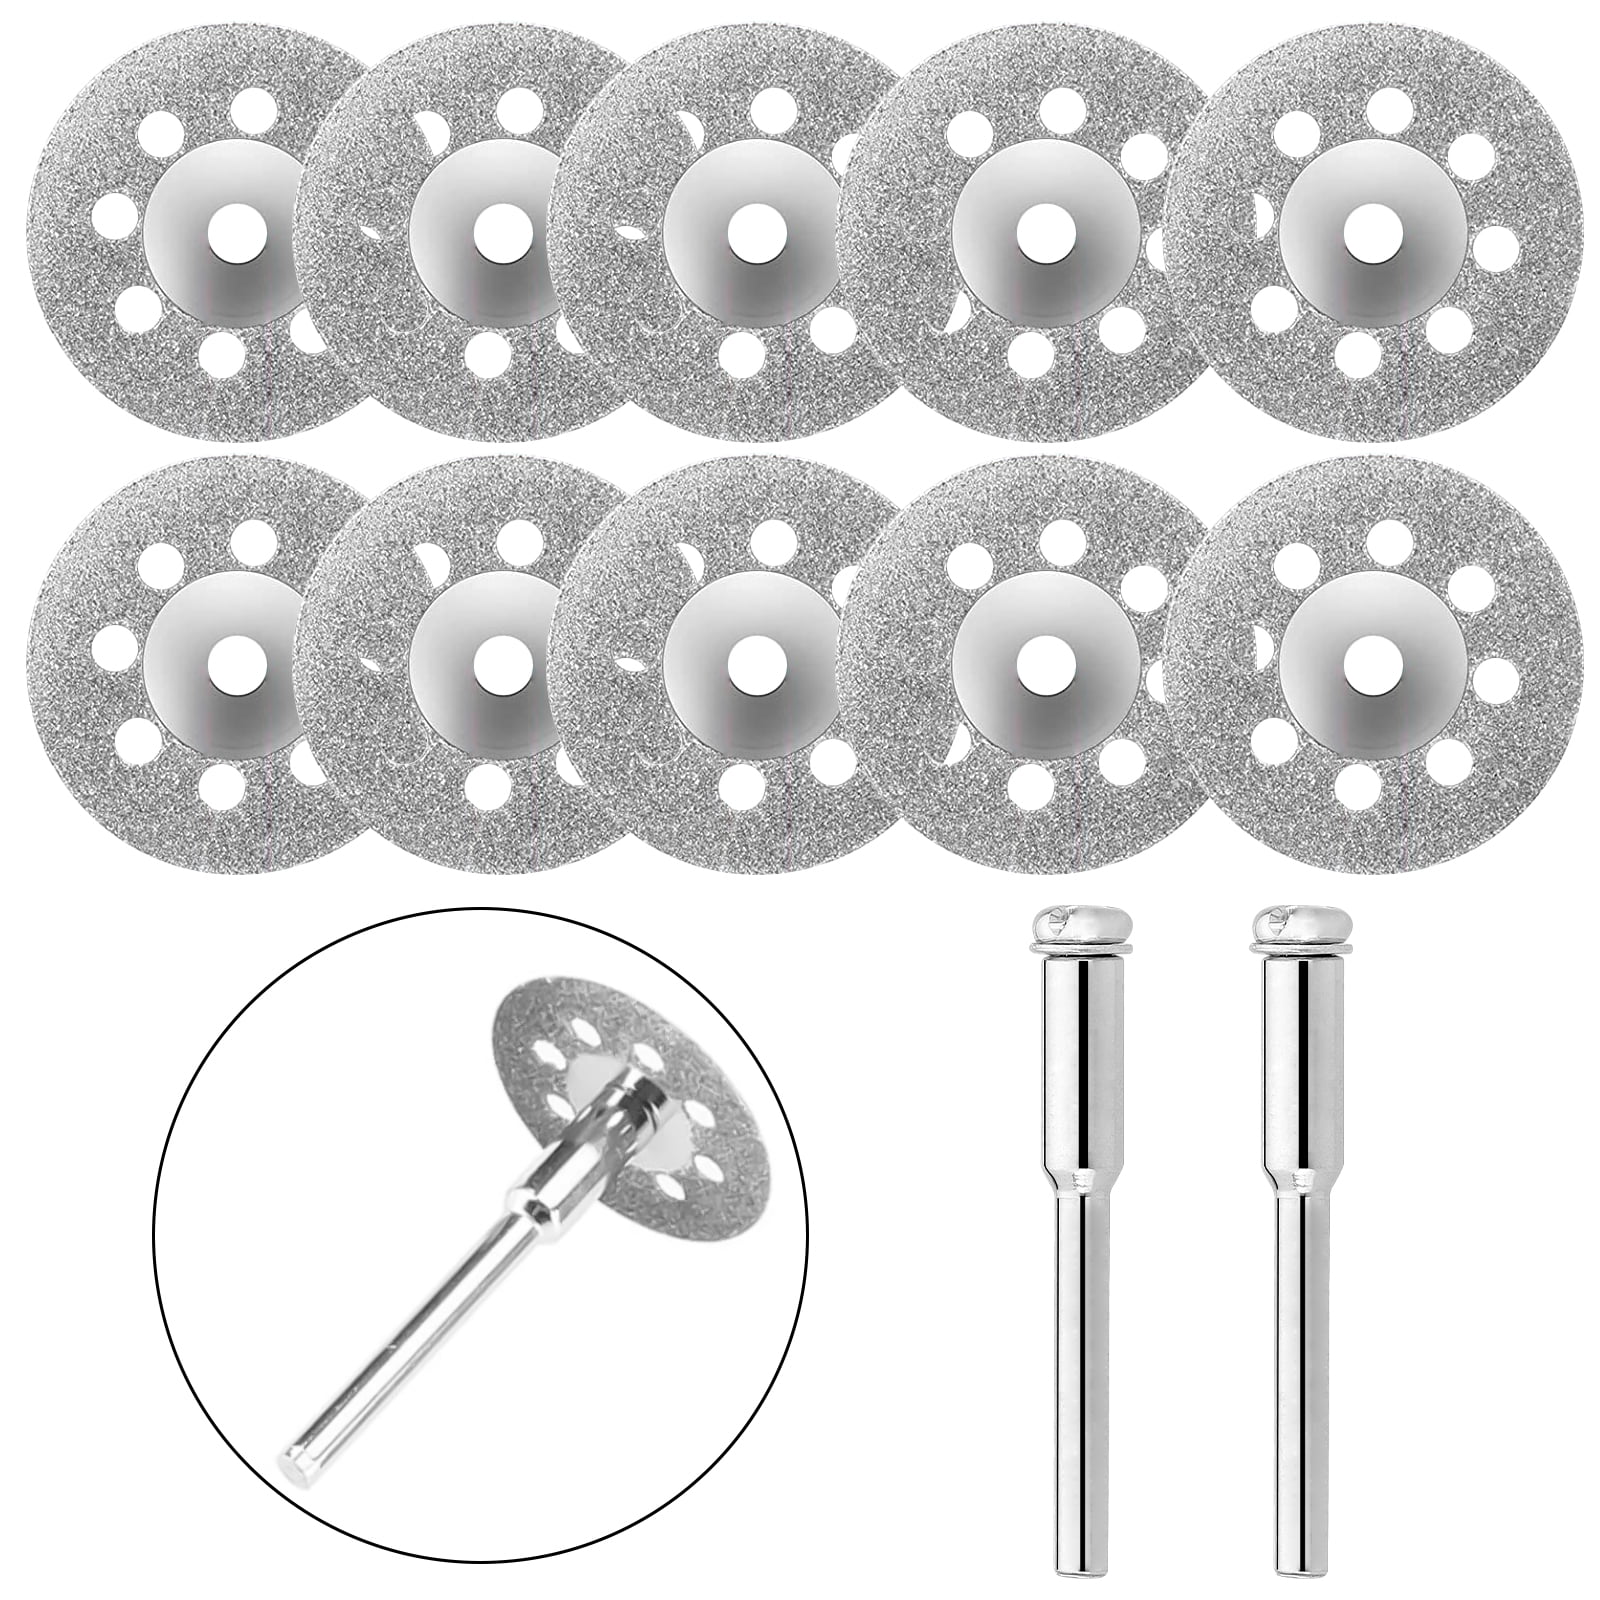 10PCS 30mm Diamond Coated Rotary Cutting Cut Off Blade Wheels Disc Kits #D 